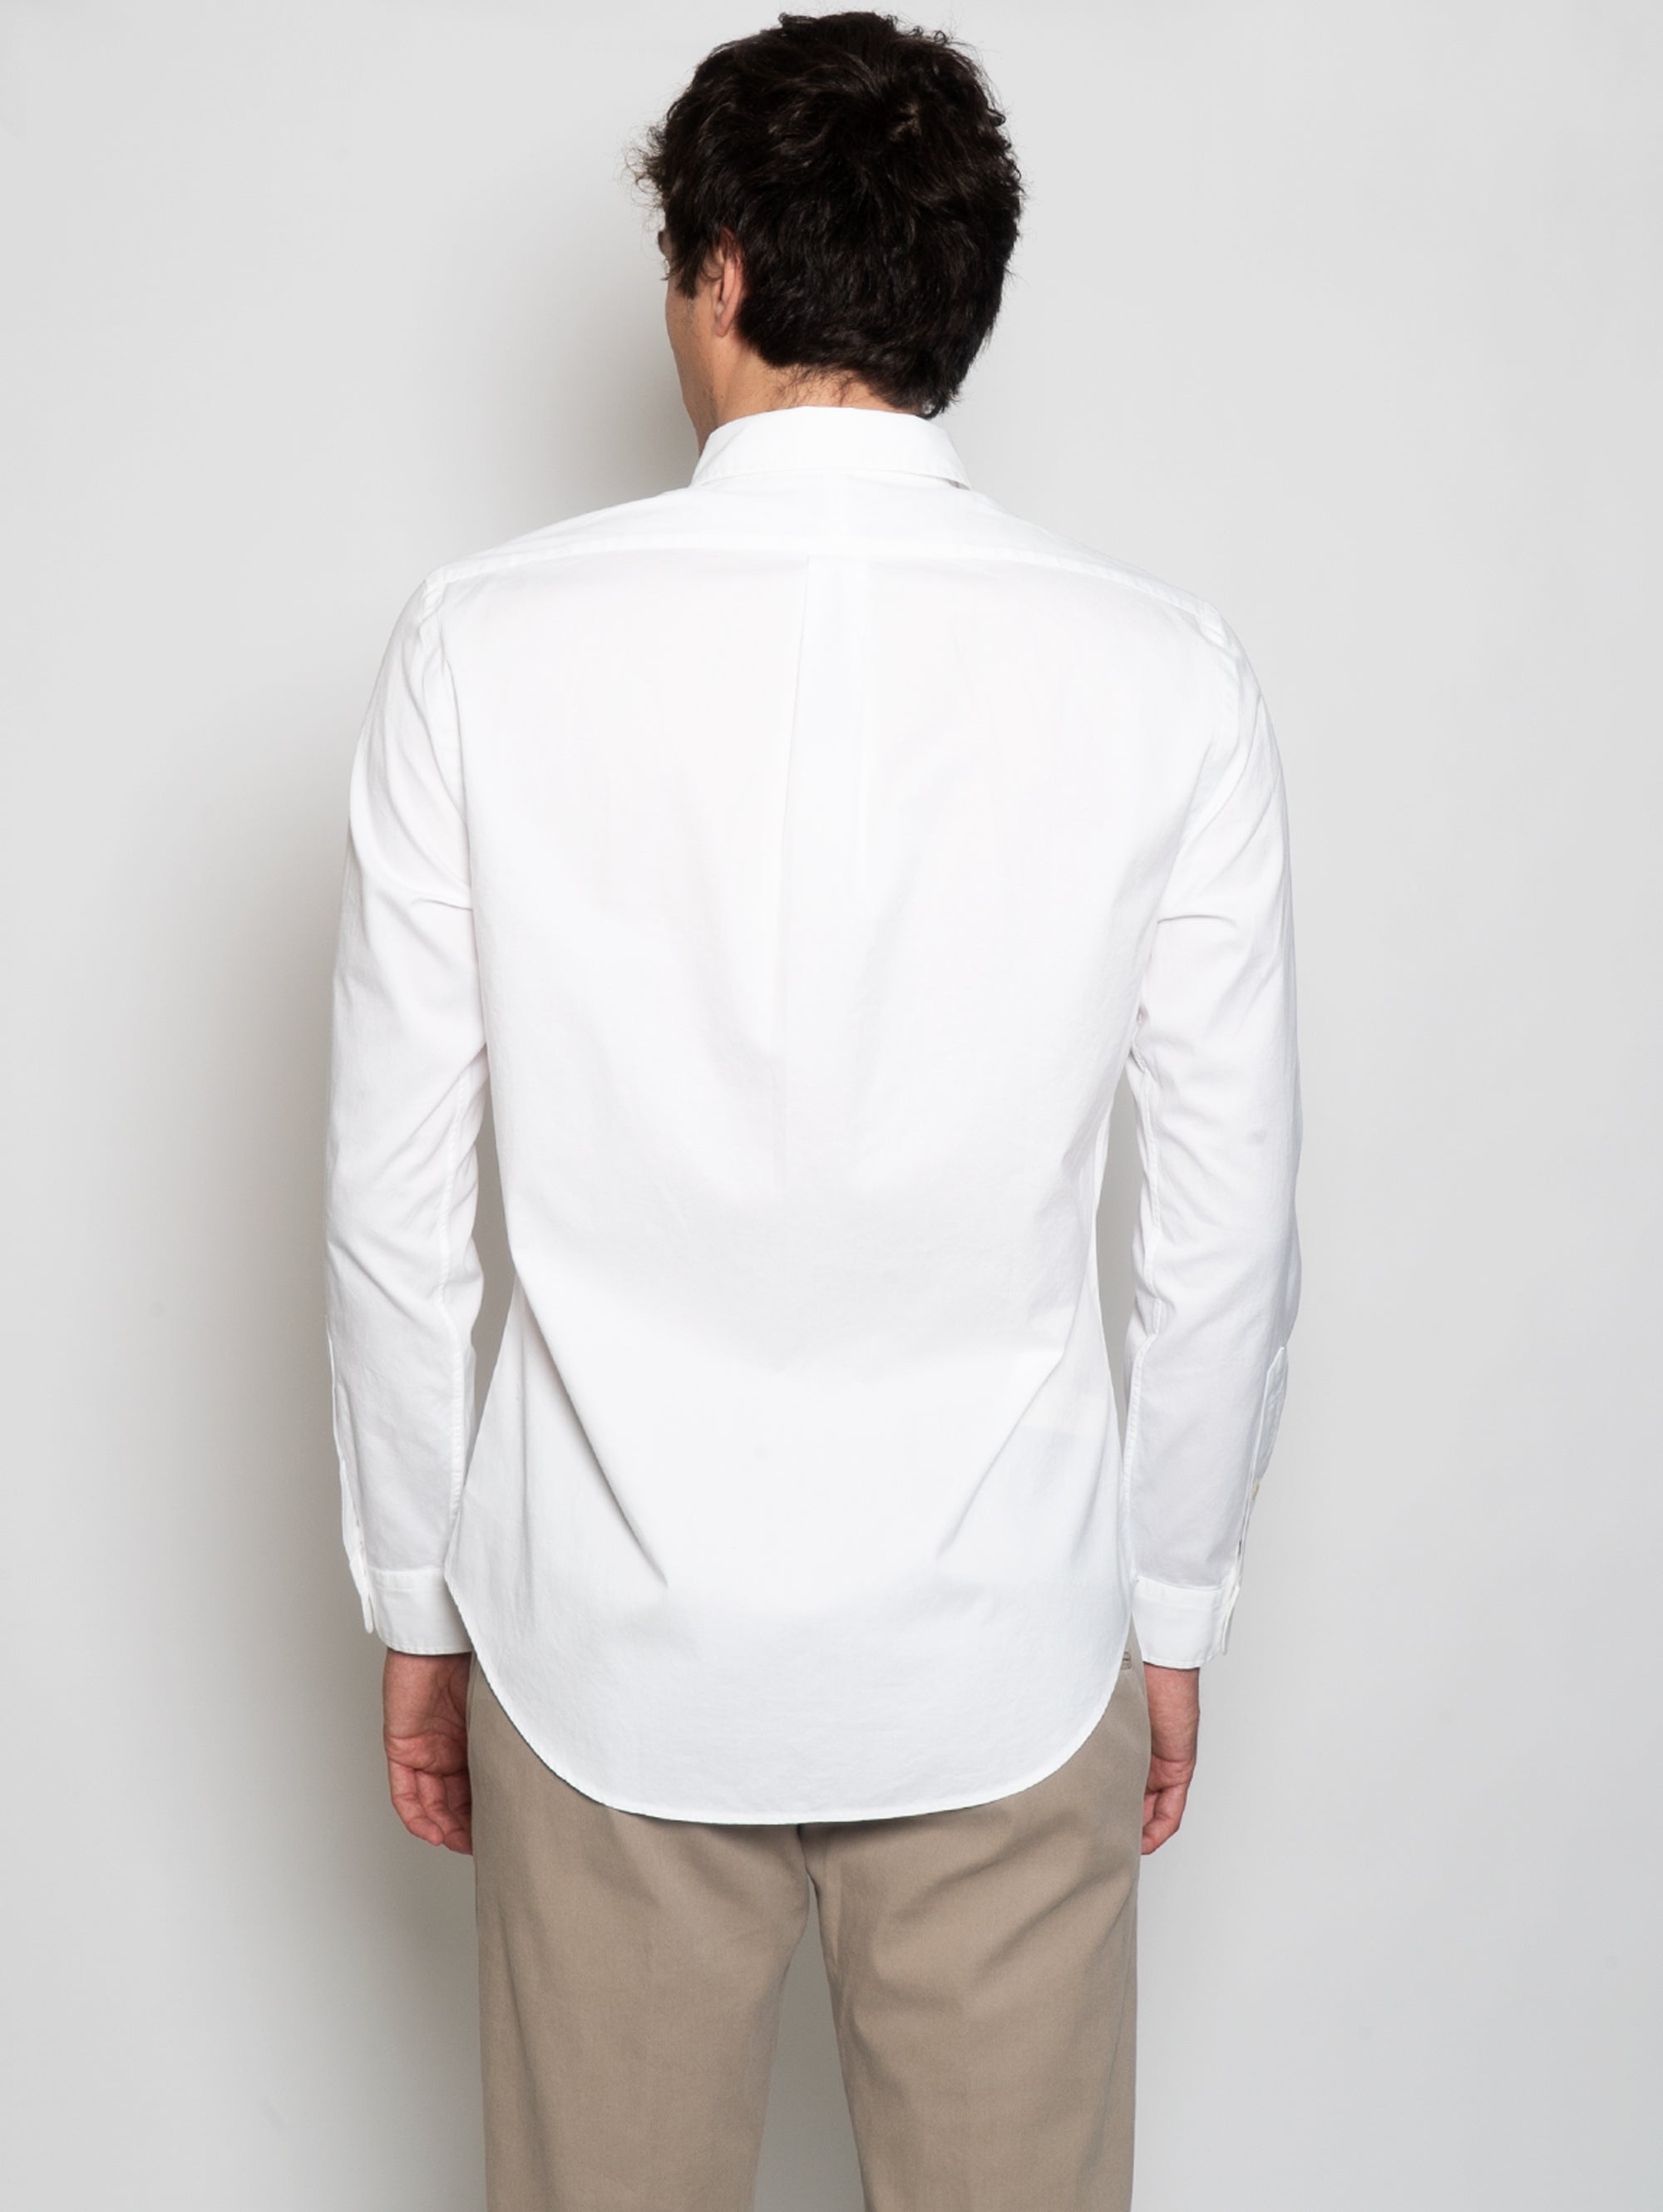 Slim Fit Shirt in White Cotton Twill